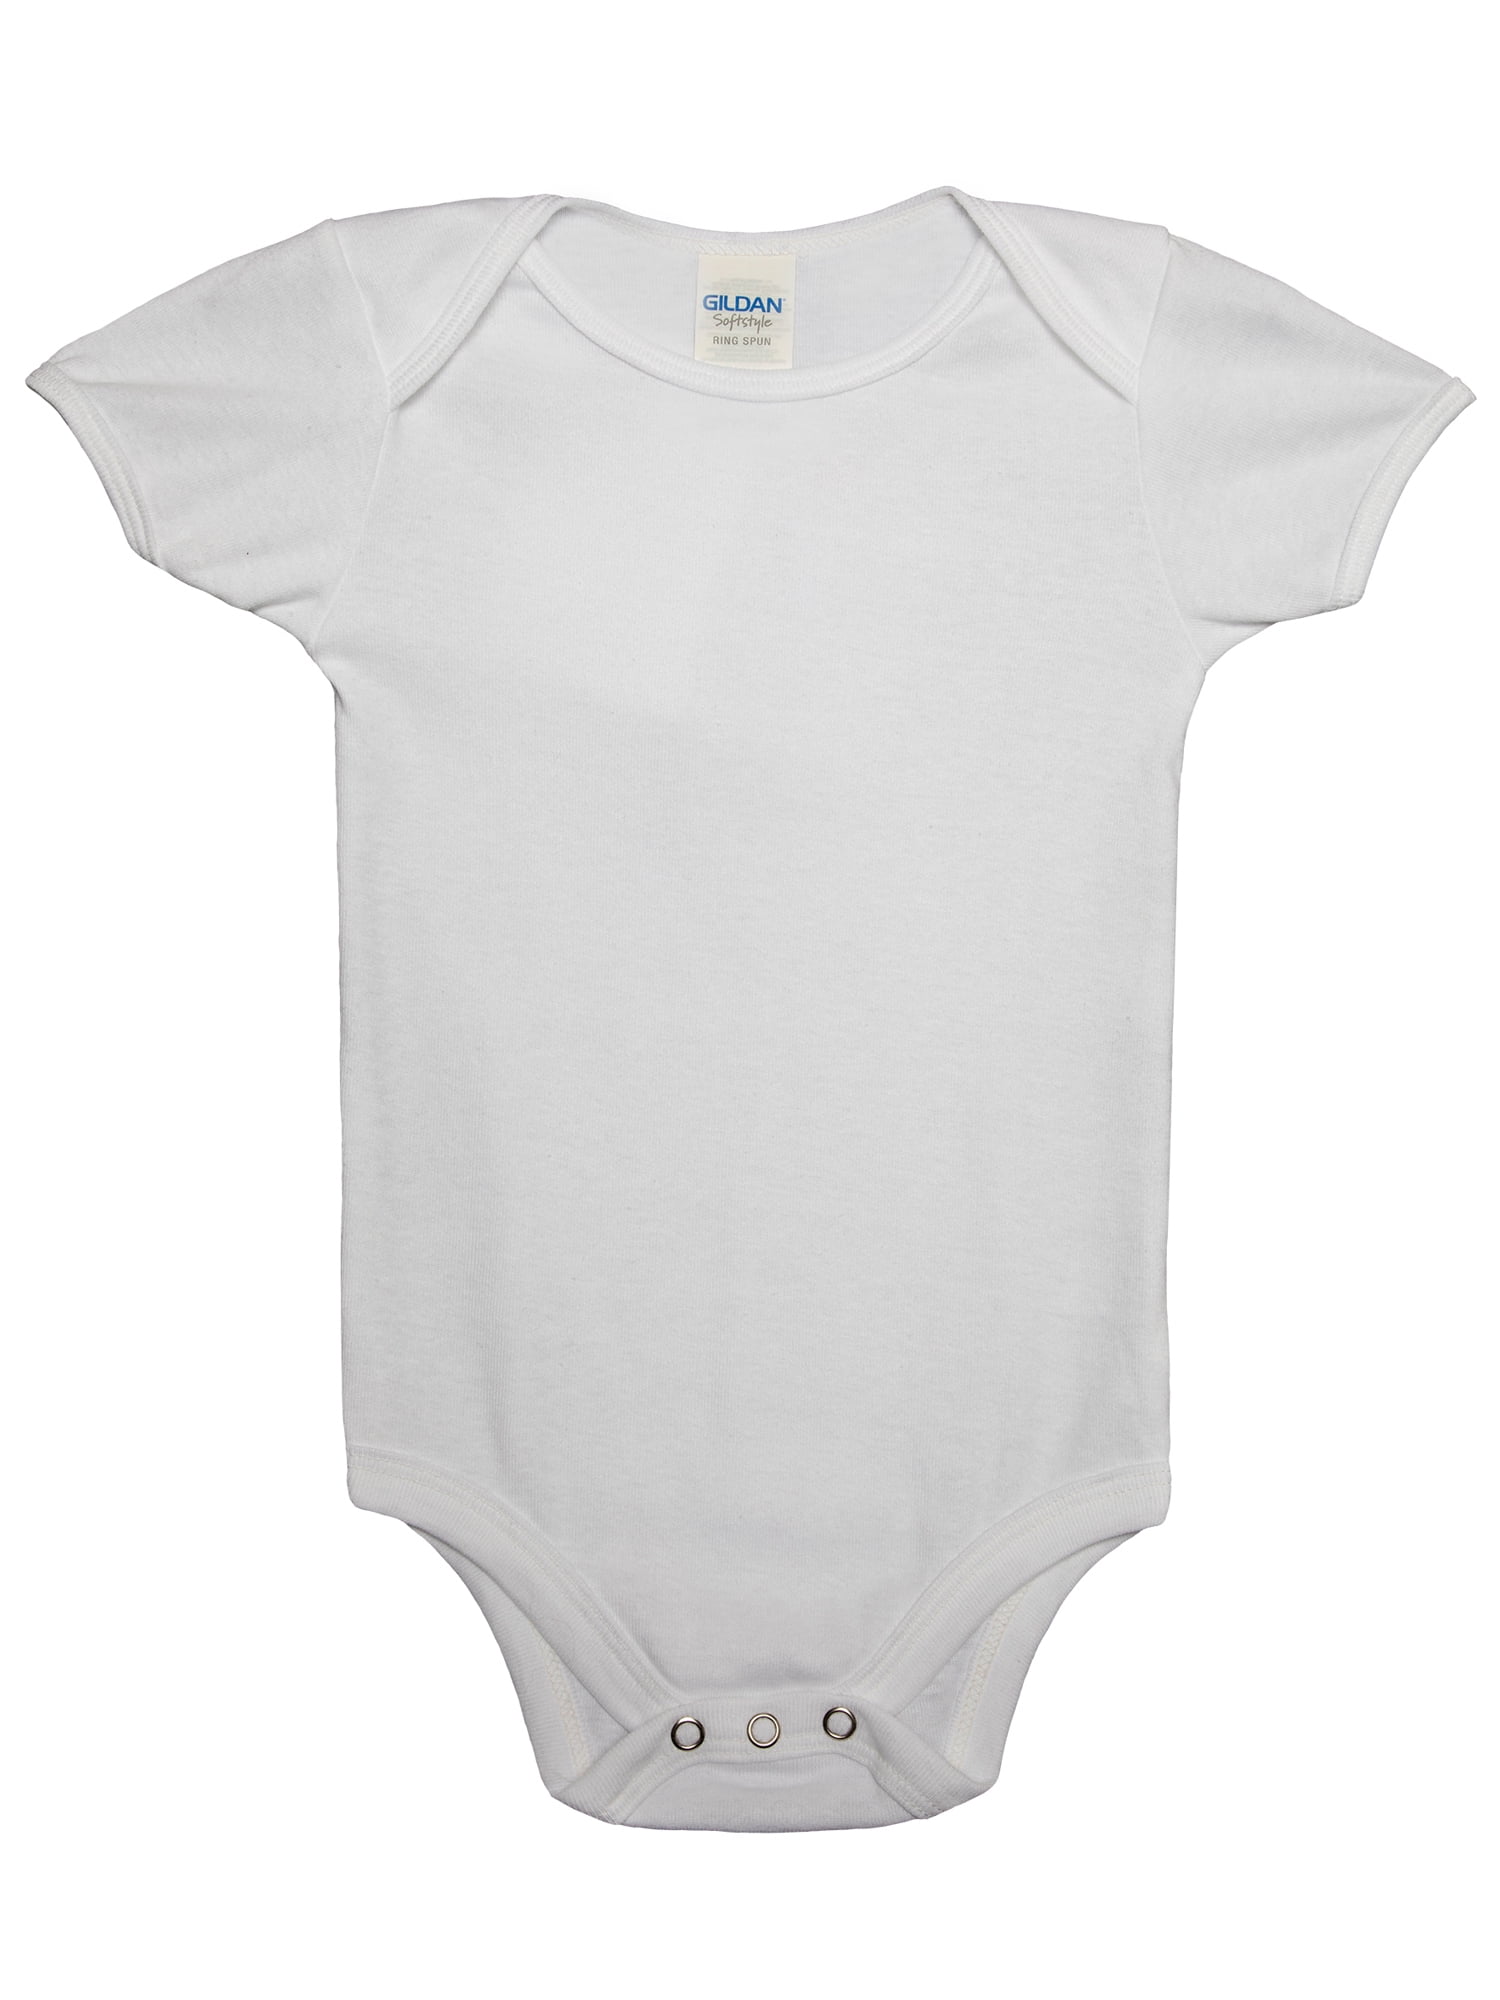 Gildan - Gildan Infant Bodysuit-White, 0-6 Month - Walmart.com ...